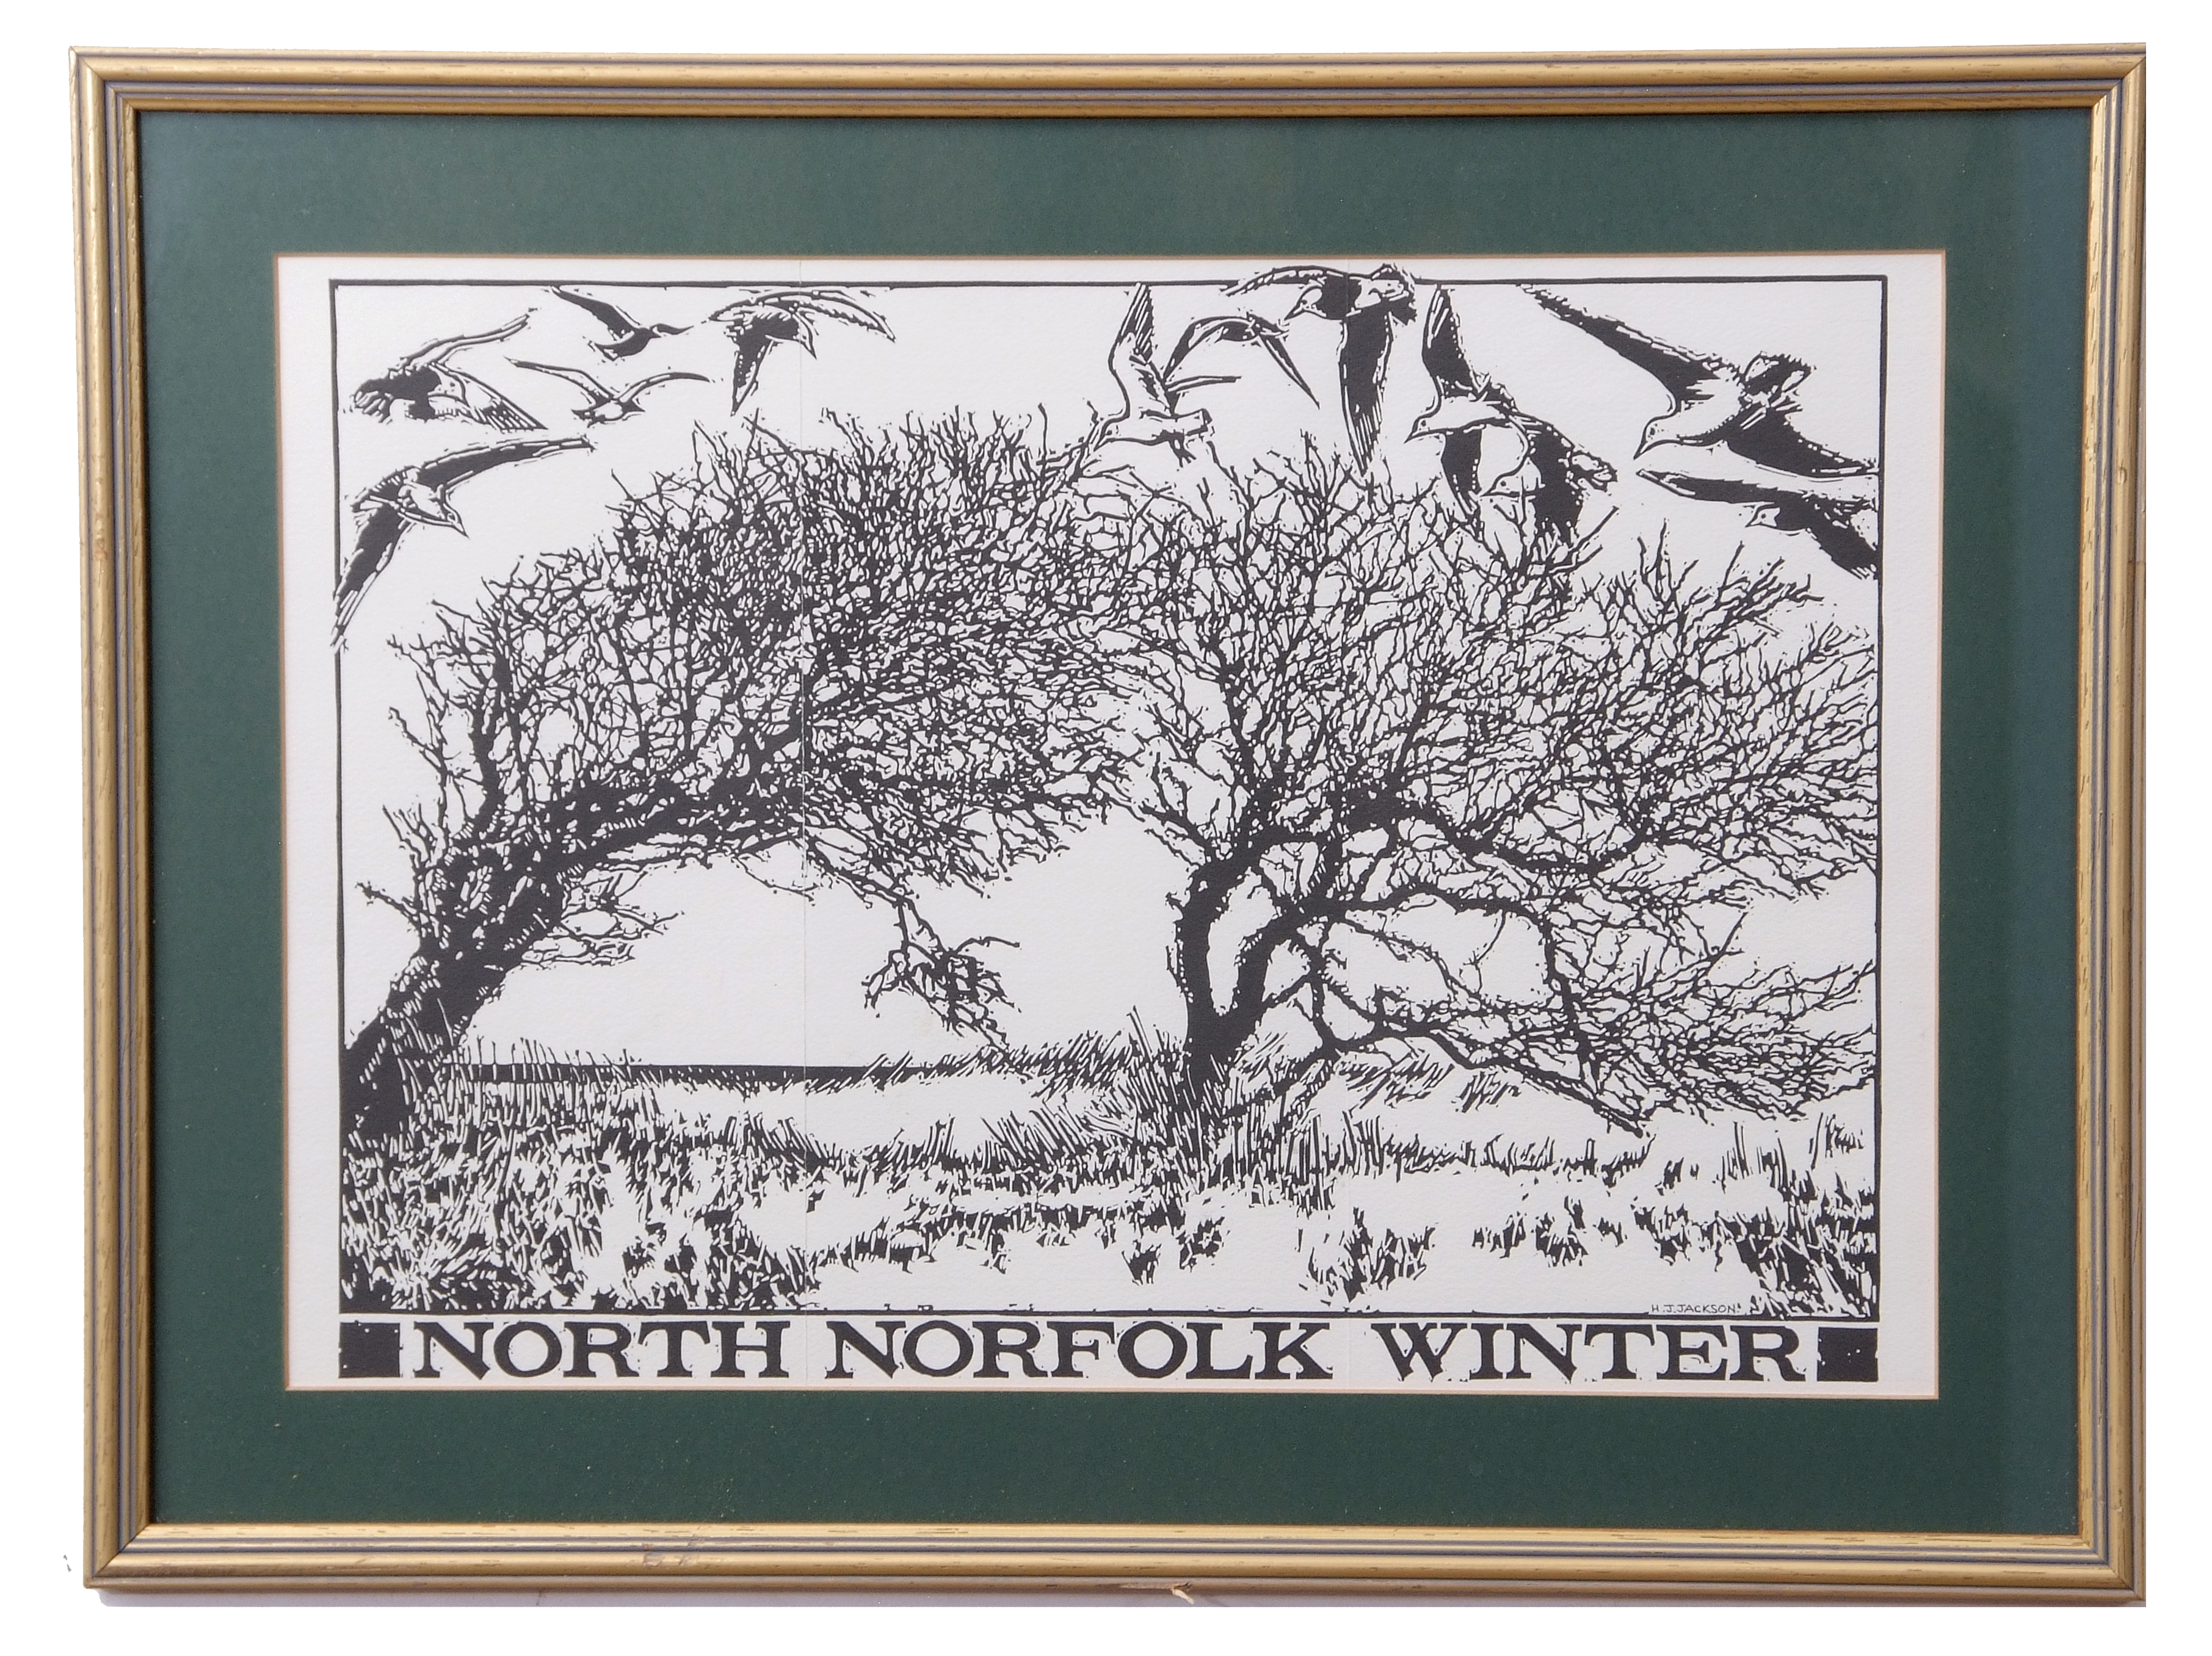 AR H John Jackson, ARE (born 1938 "North Norfolk Winter" black and white print 27 x 39cm